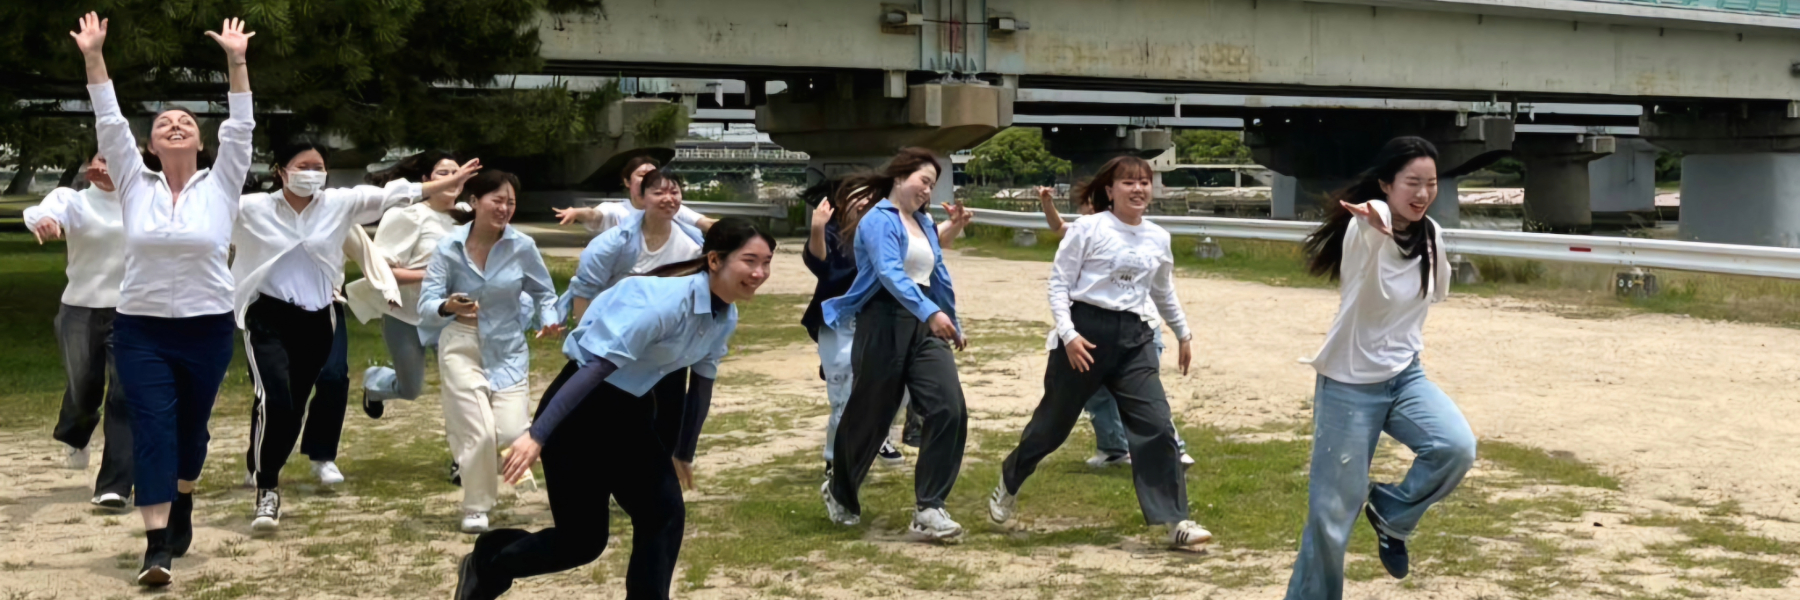 Lisa Sandlos in Japan with dance students